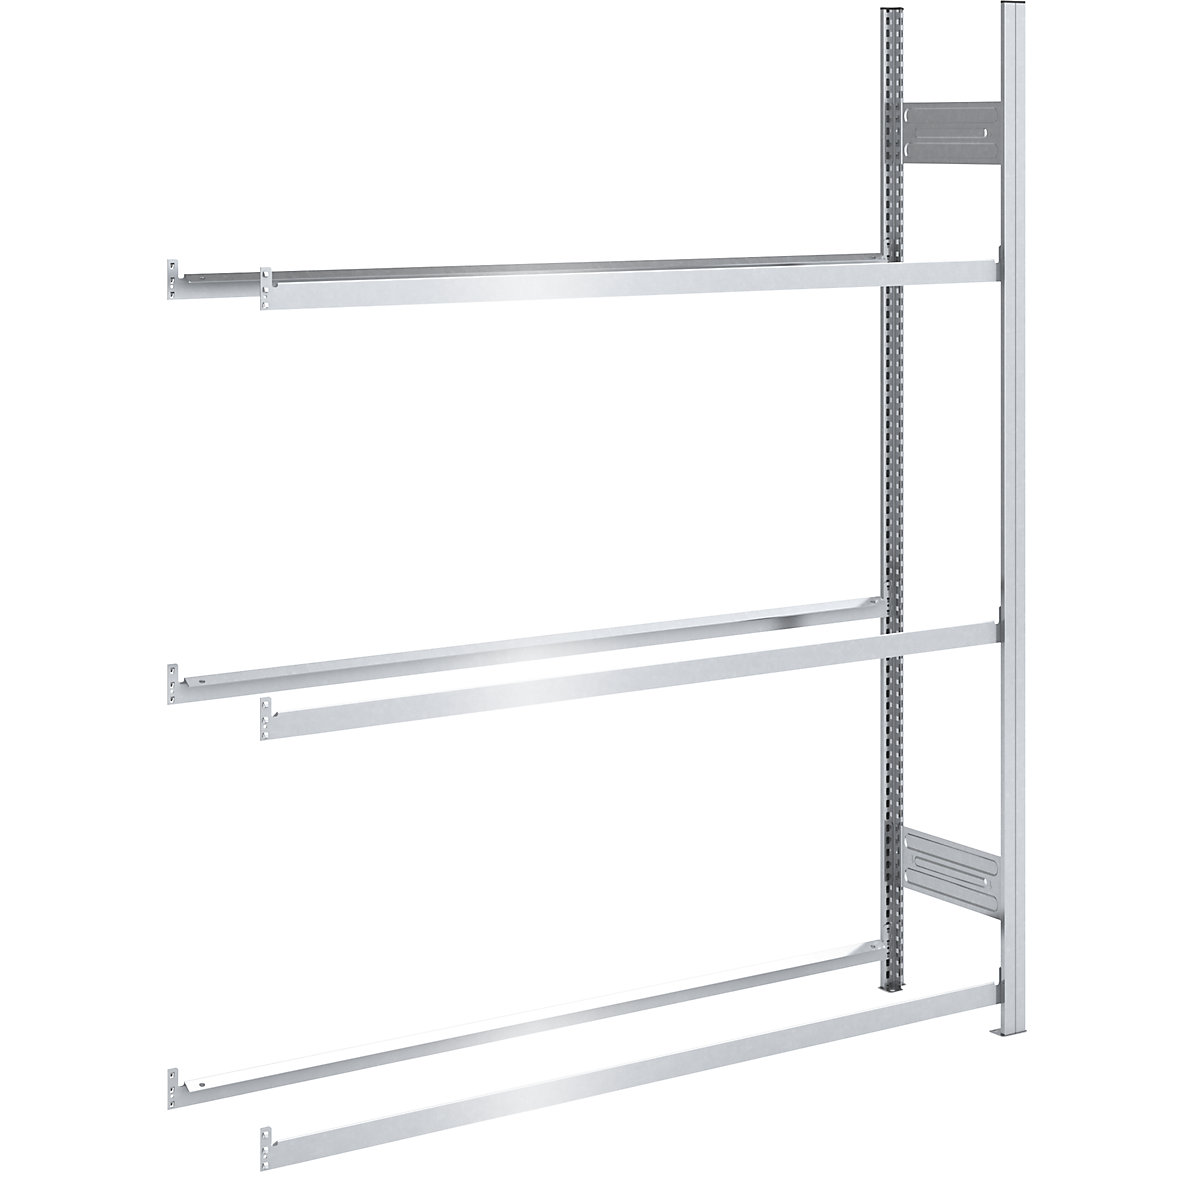 Tyre shelf unit – hofe, shelf height 2000 mm, extension shelf unit, WxD 1510 x 435 mm